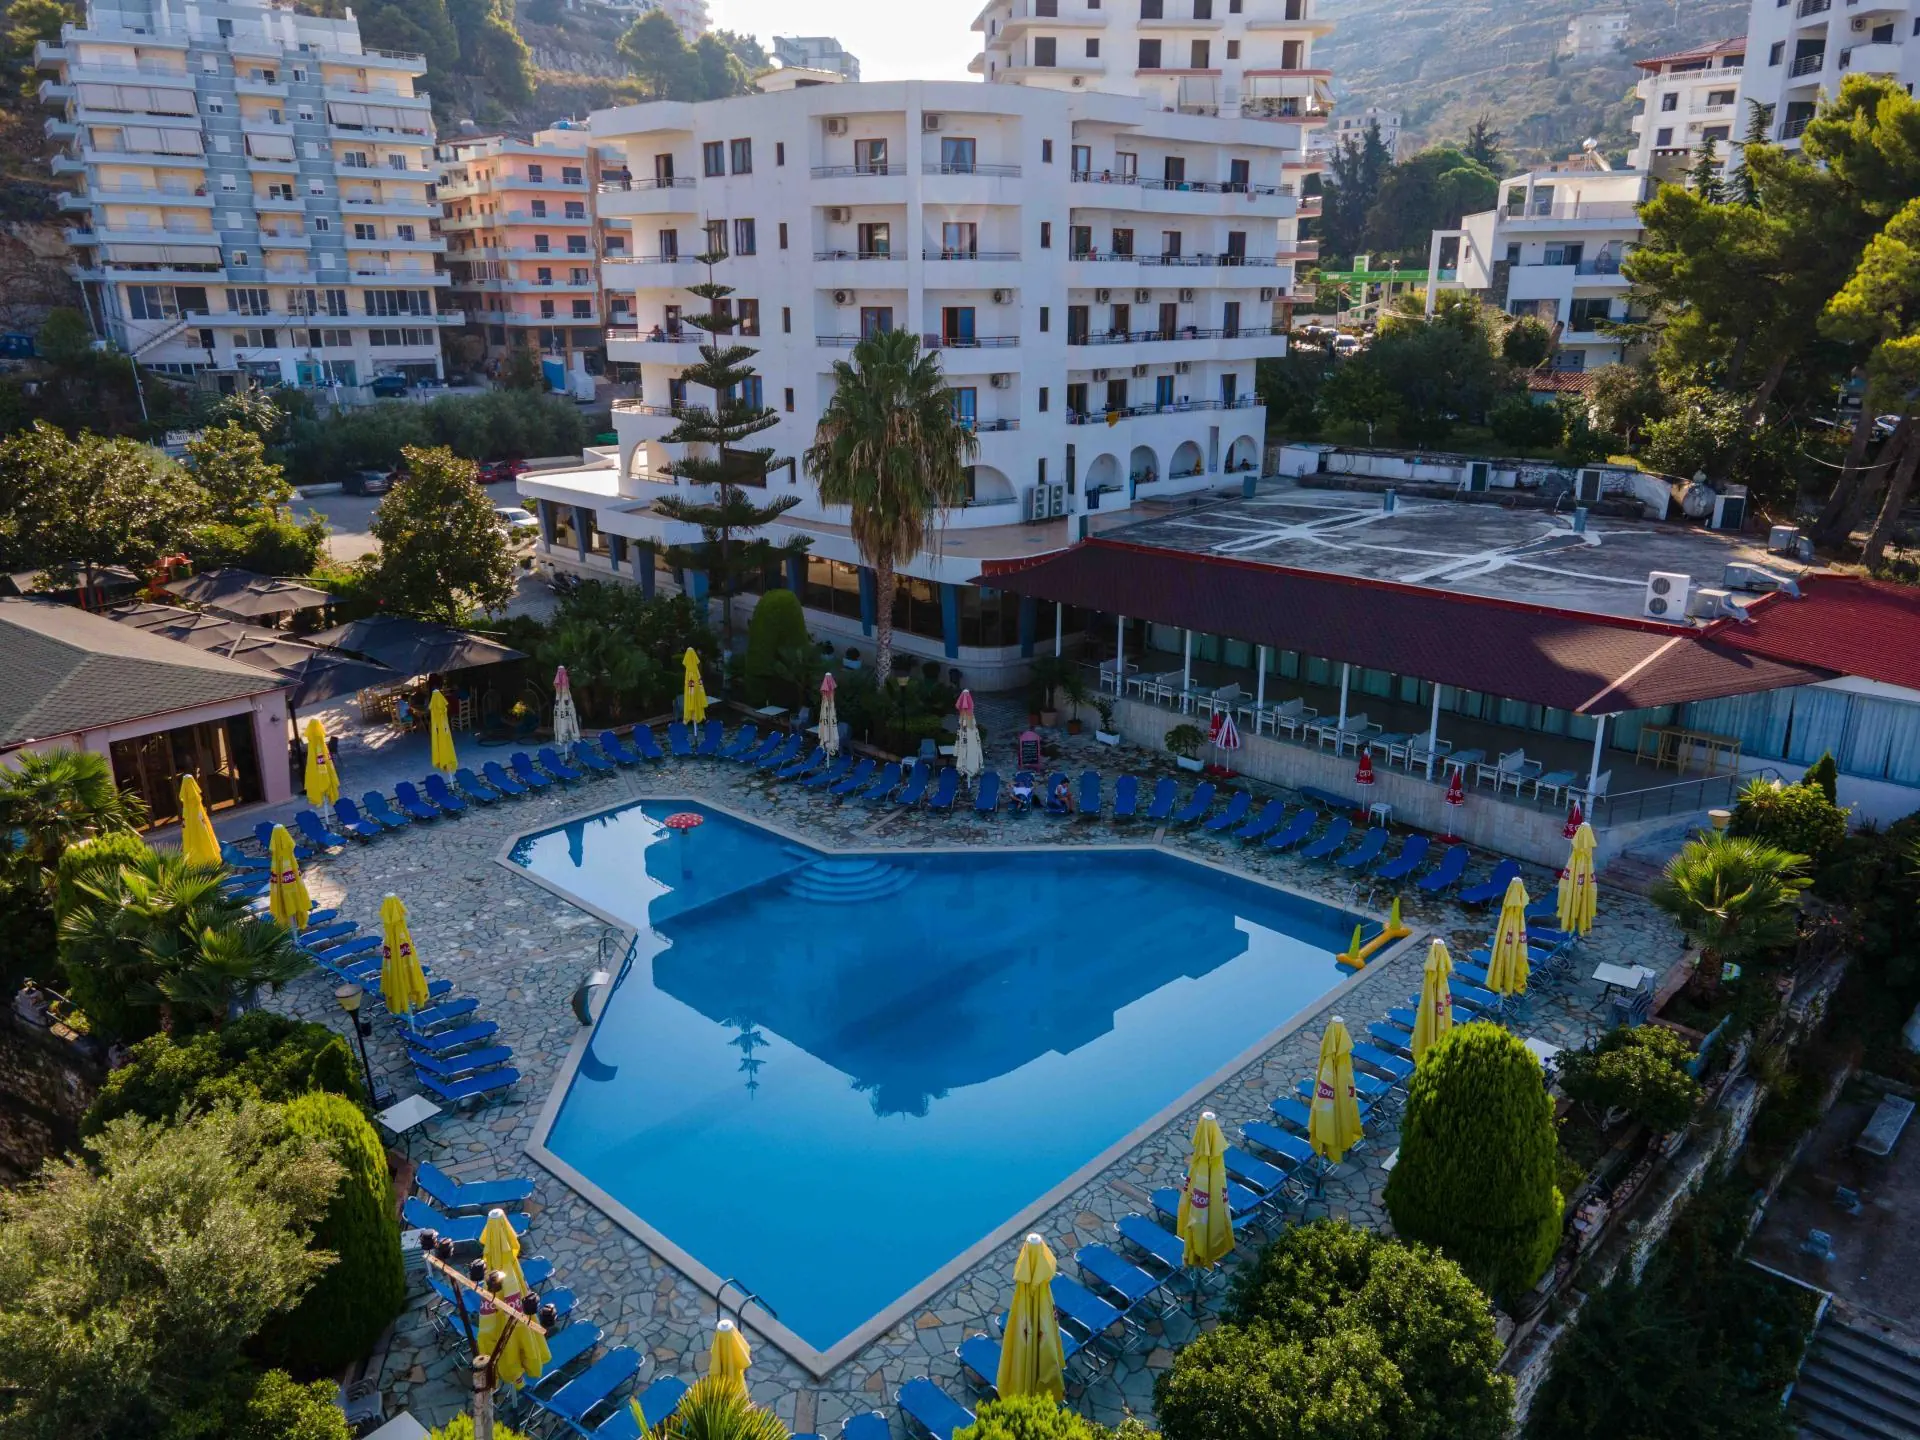 Hotel Mediterrane